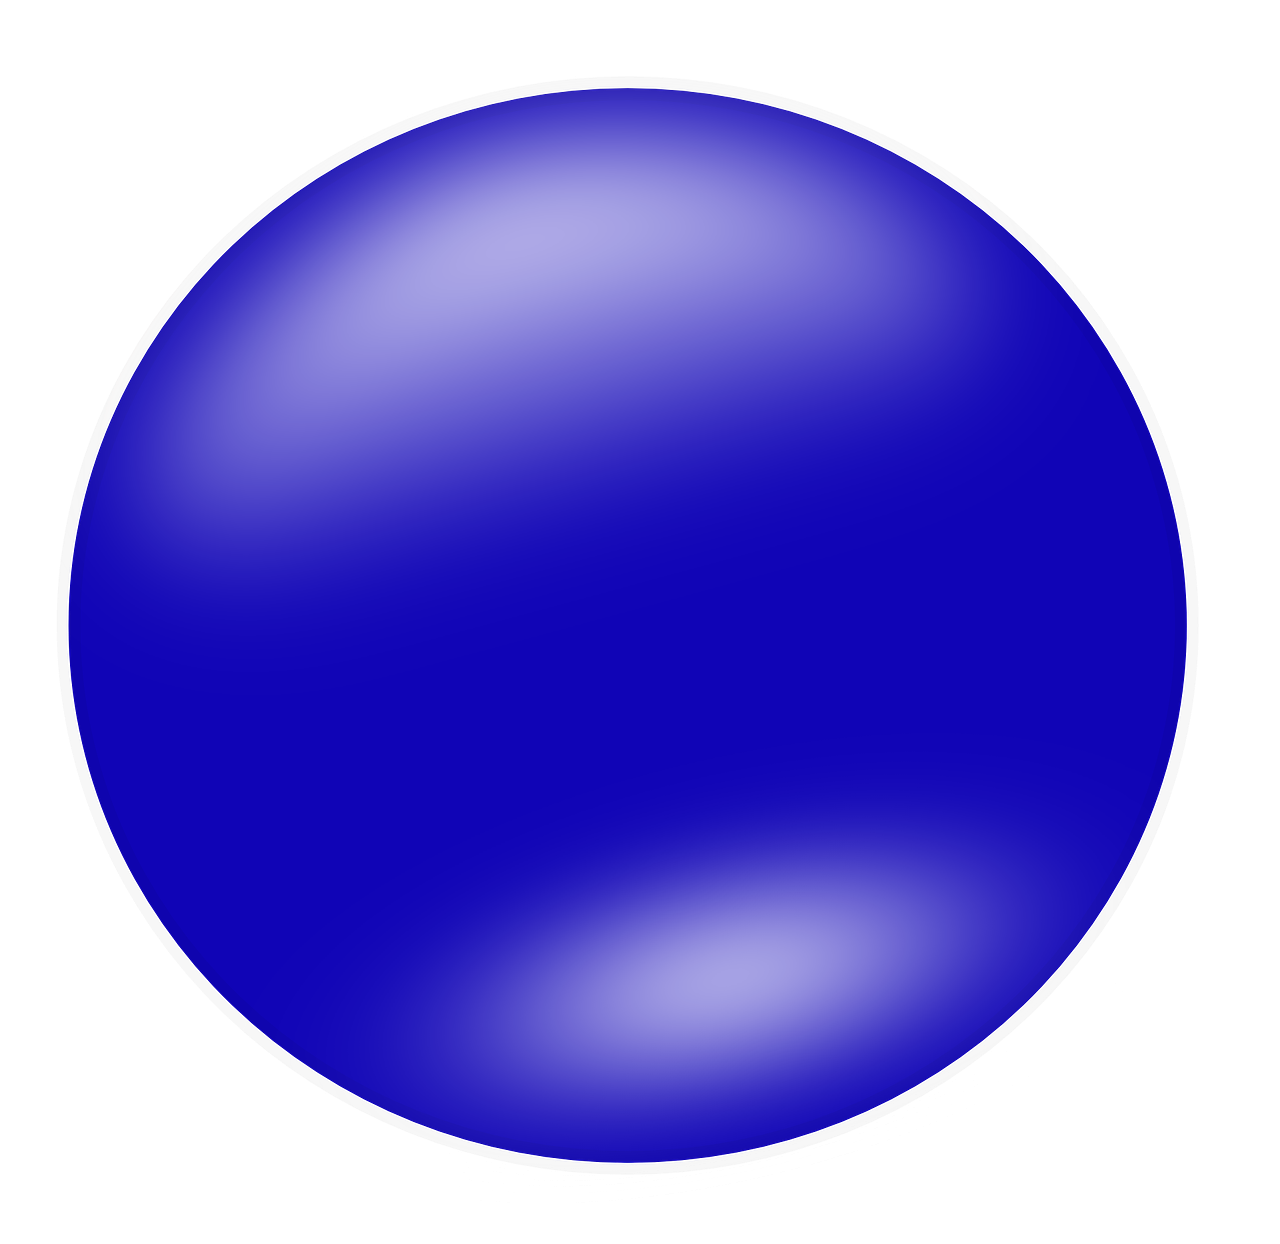 Круг картинка. Синий круг. Геометрические фигуры круг. Синие кружочки. Голубой круг.